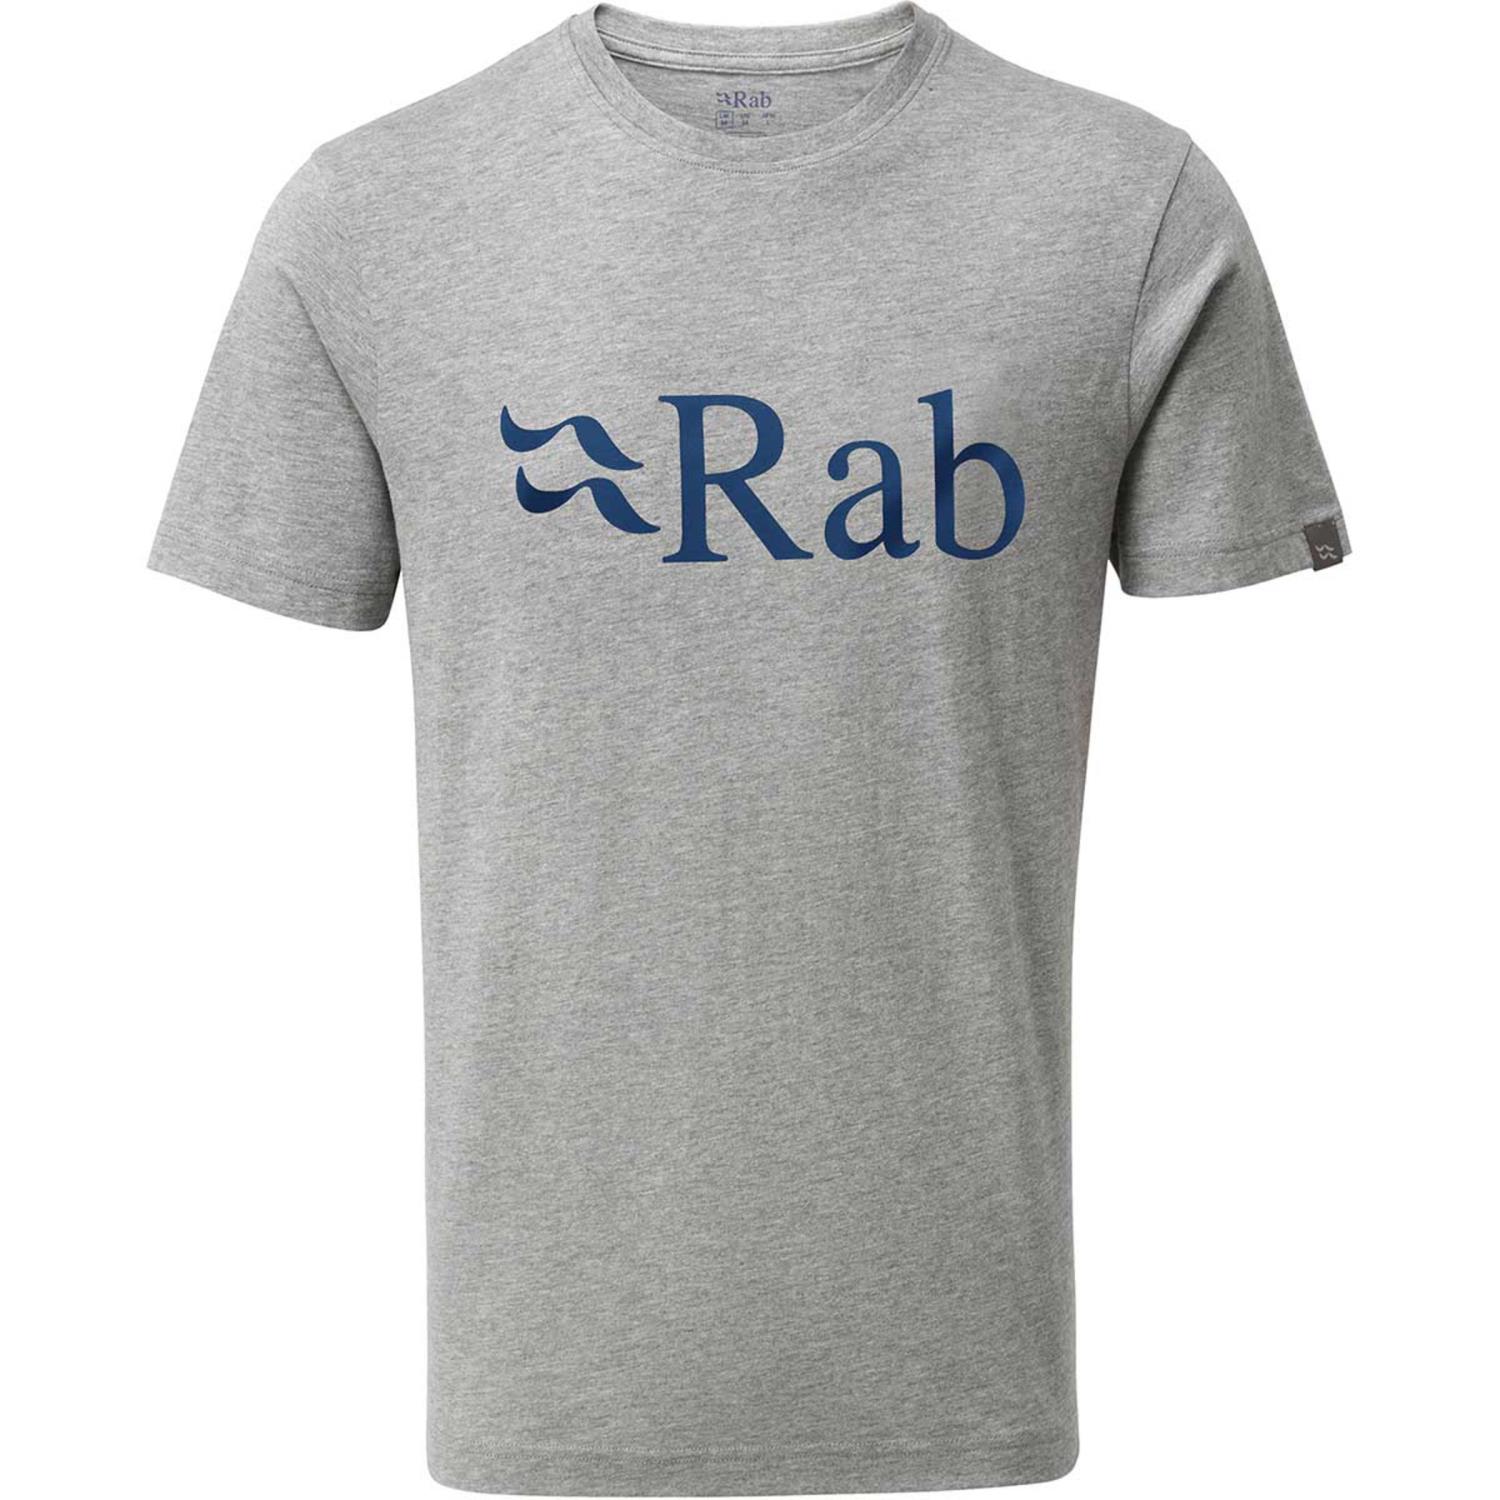 Rab Stance Logo tee grey